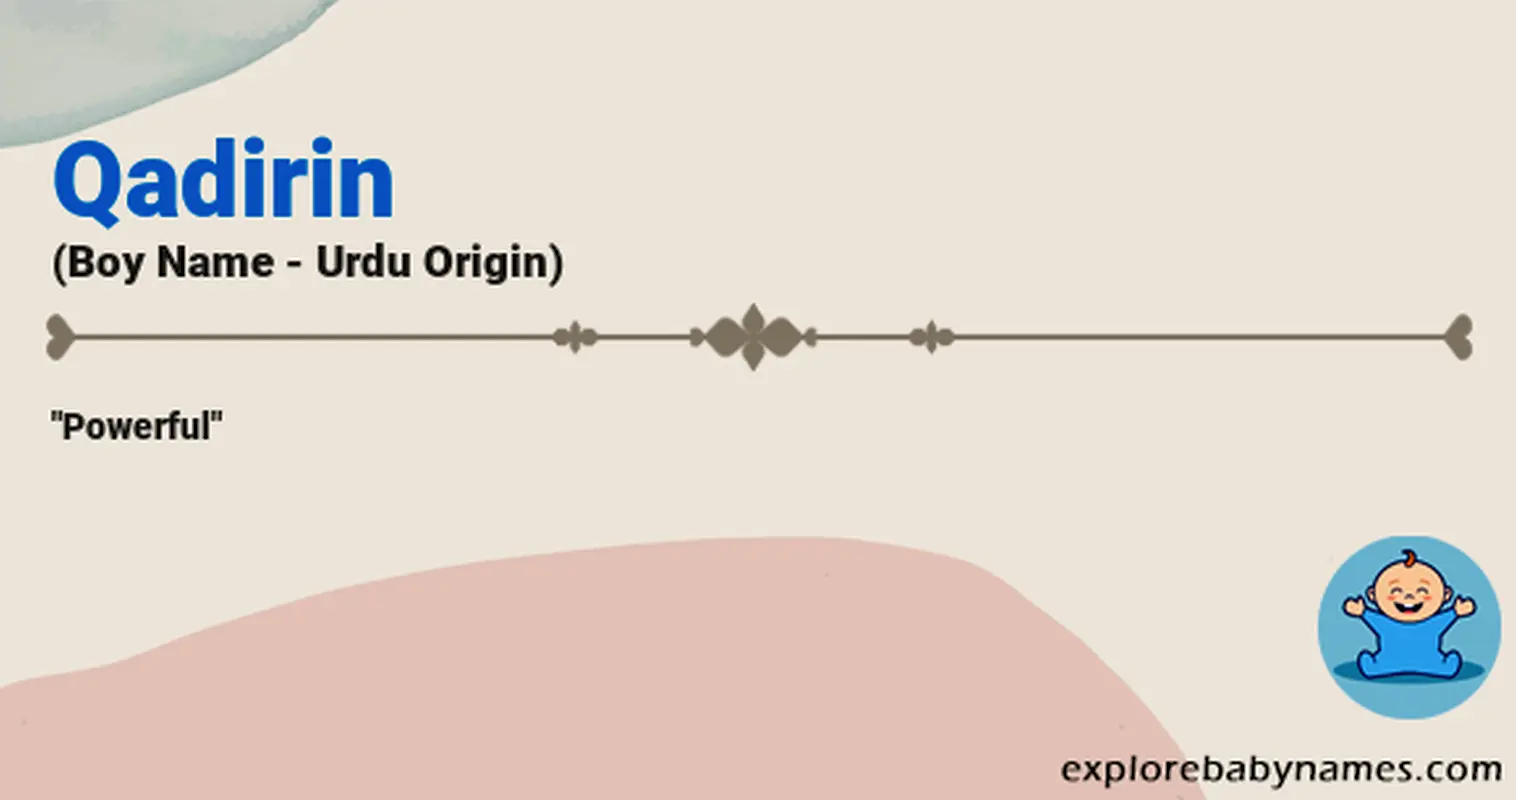 Meaning of Qadirin